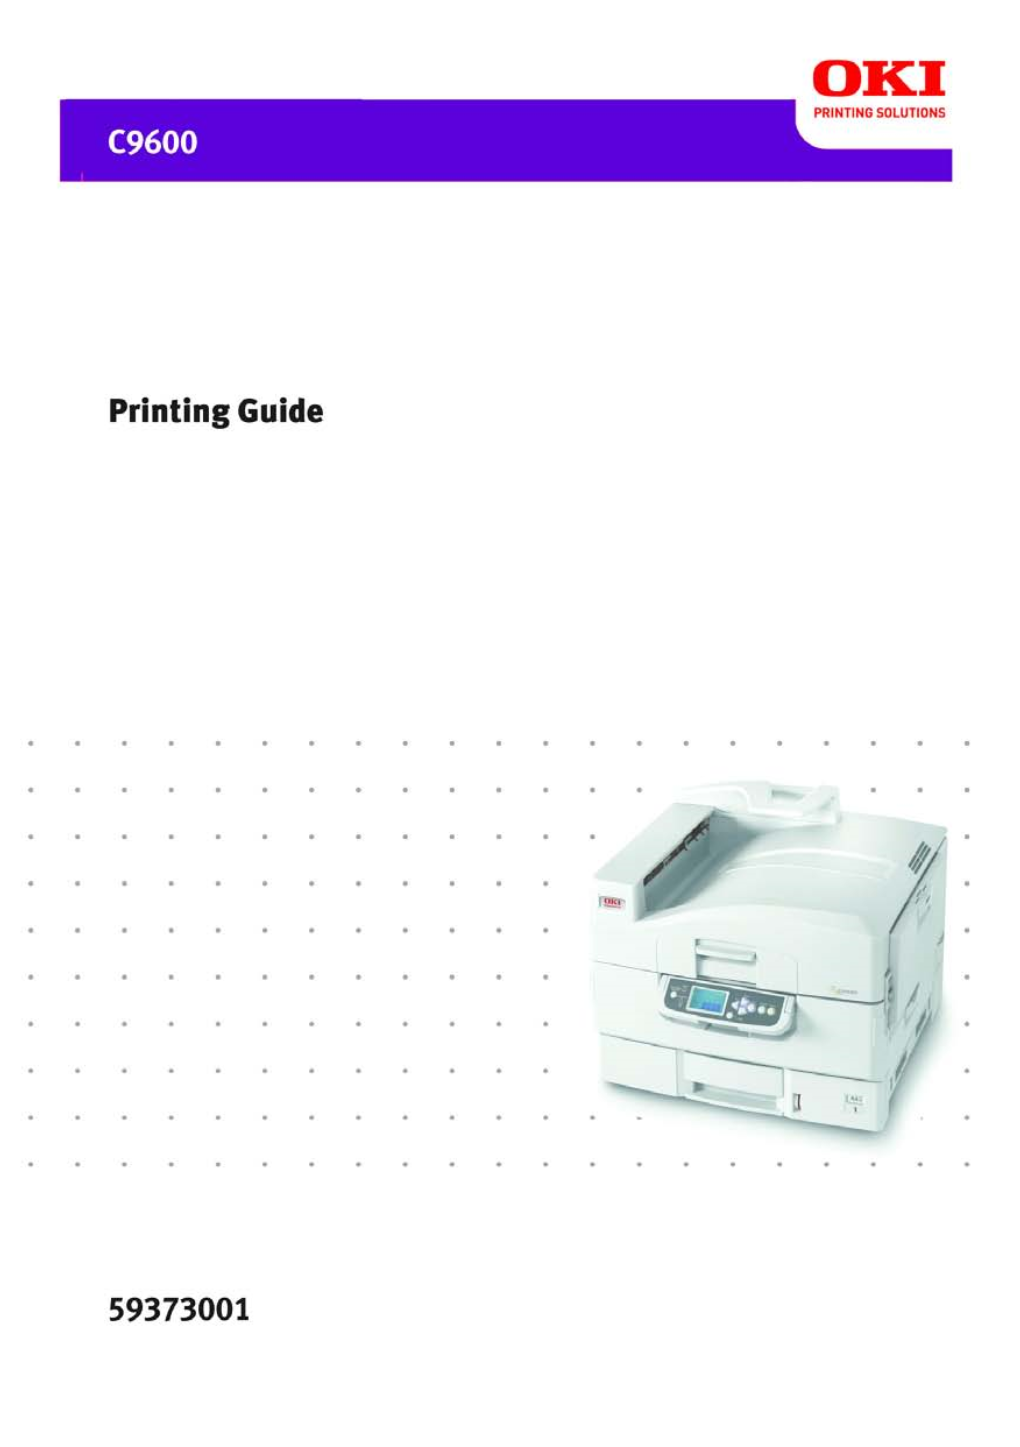 C9600 Printing Guide V1.0